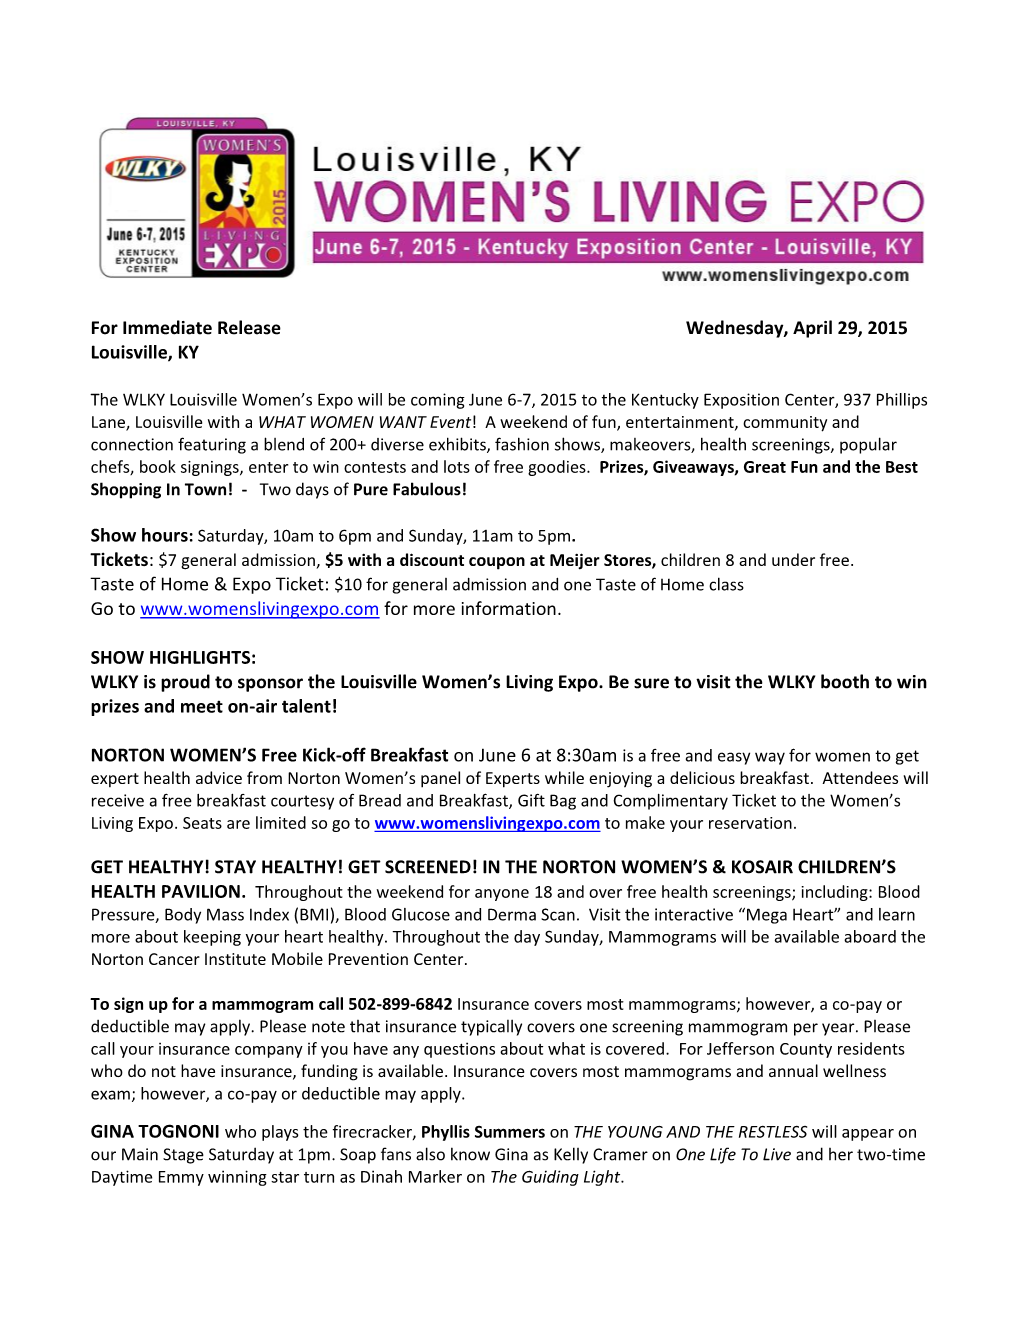 WLKY Women's Living Expo Press Release